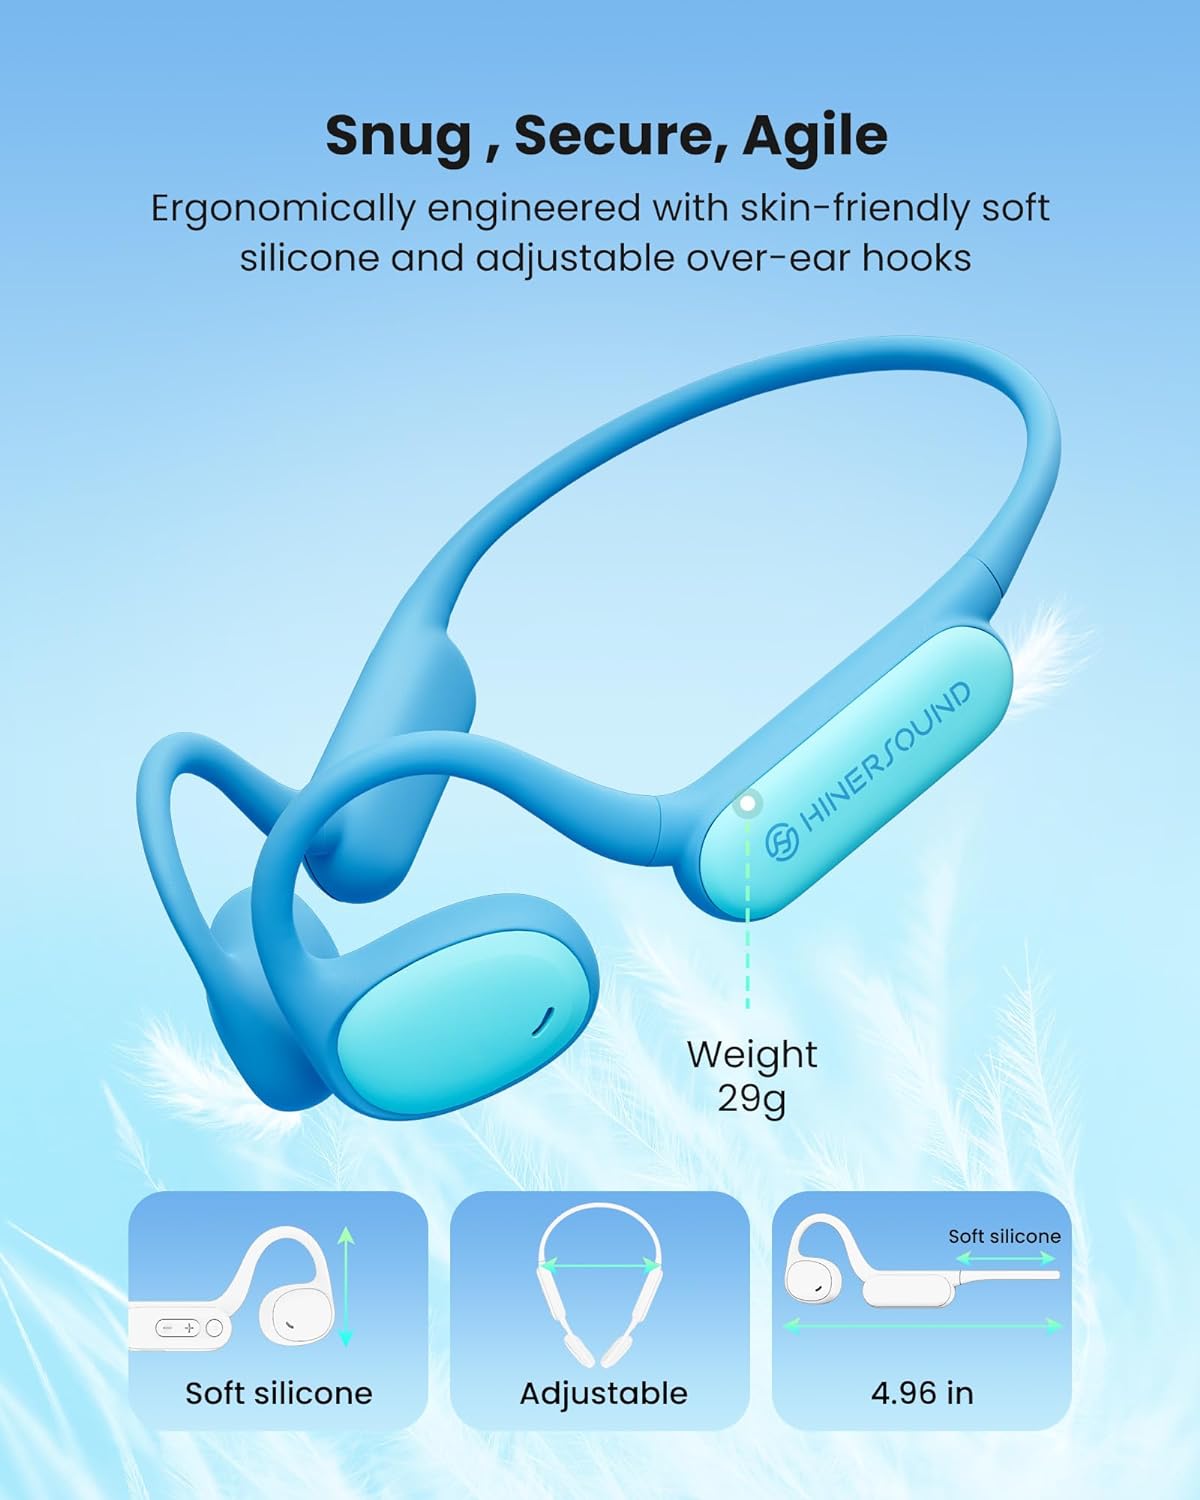 Hinersound Open Ear Wireless Air Conduction Kids Headphones - Blue